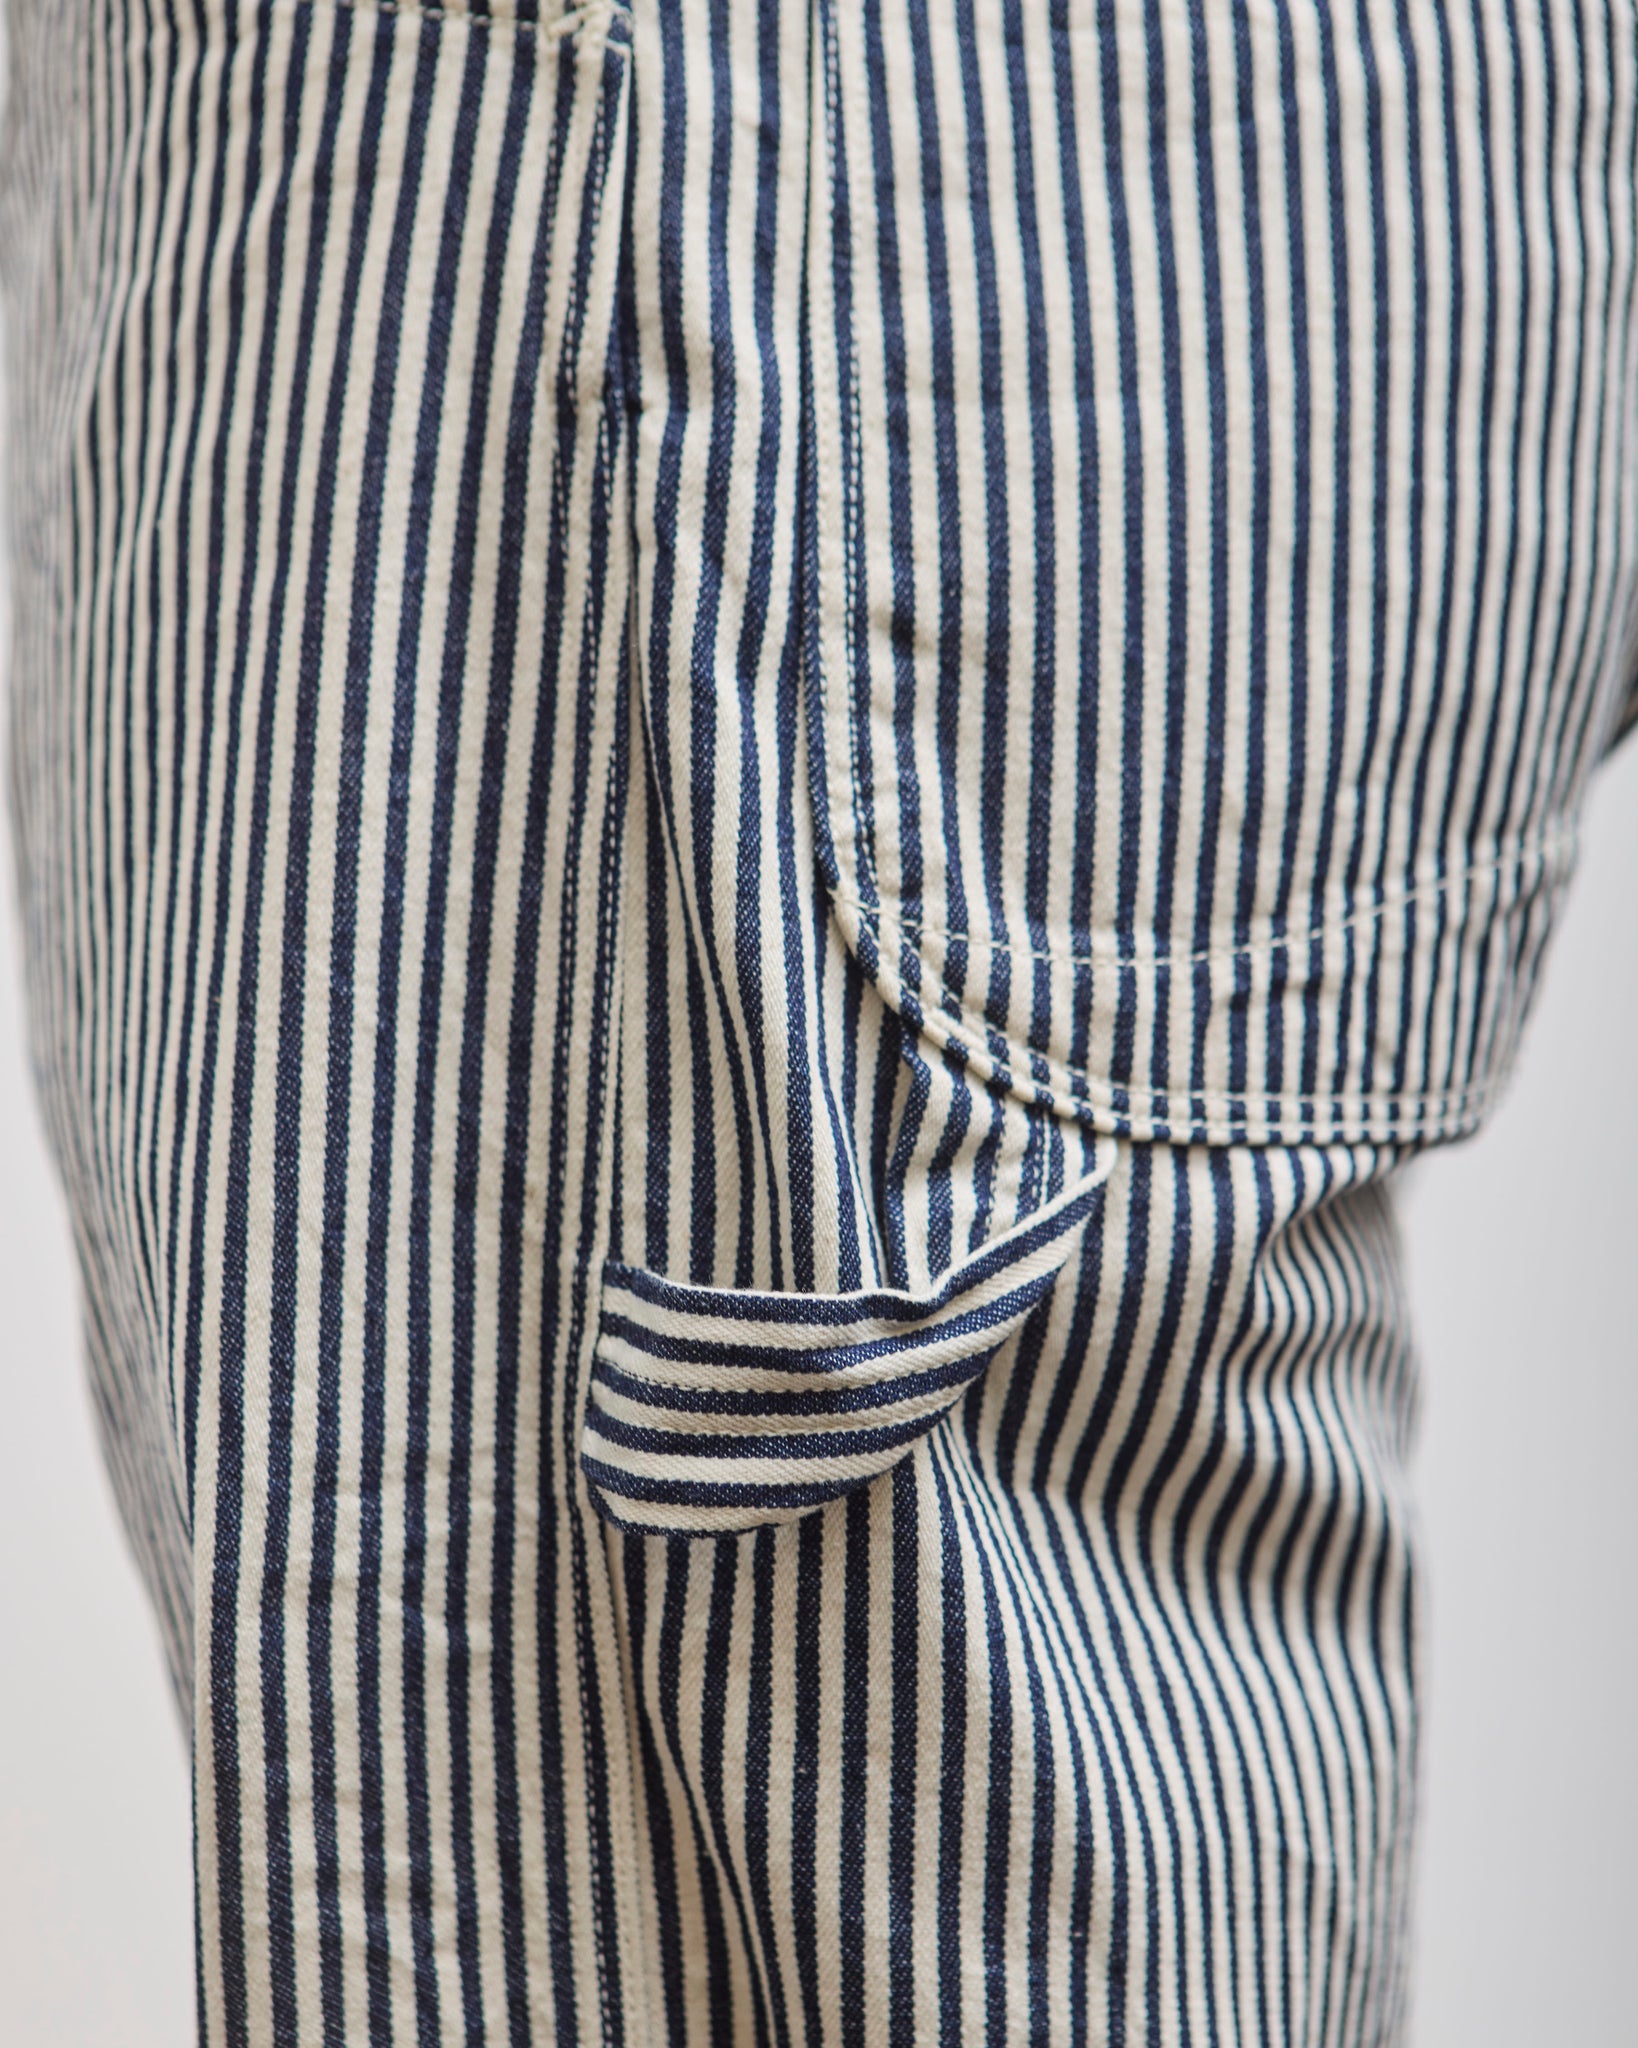 orSlow Painter Pants, Hickory Stripe